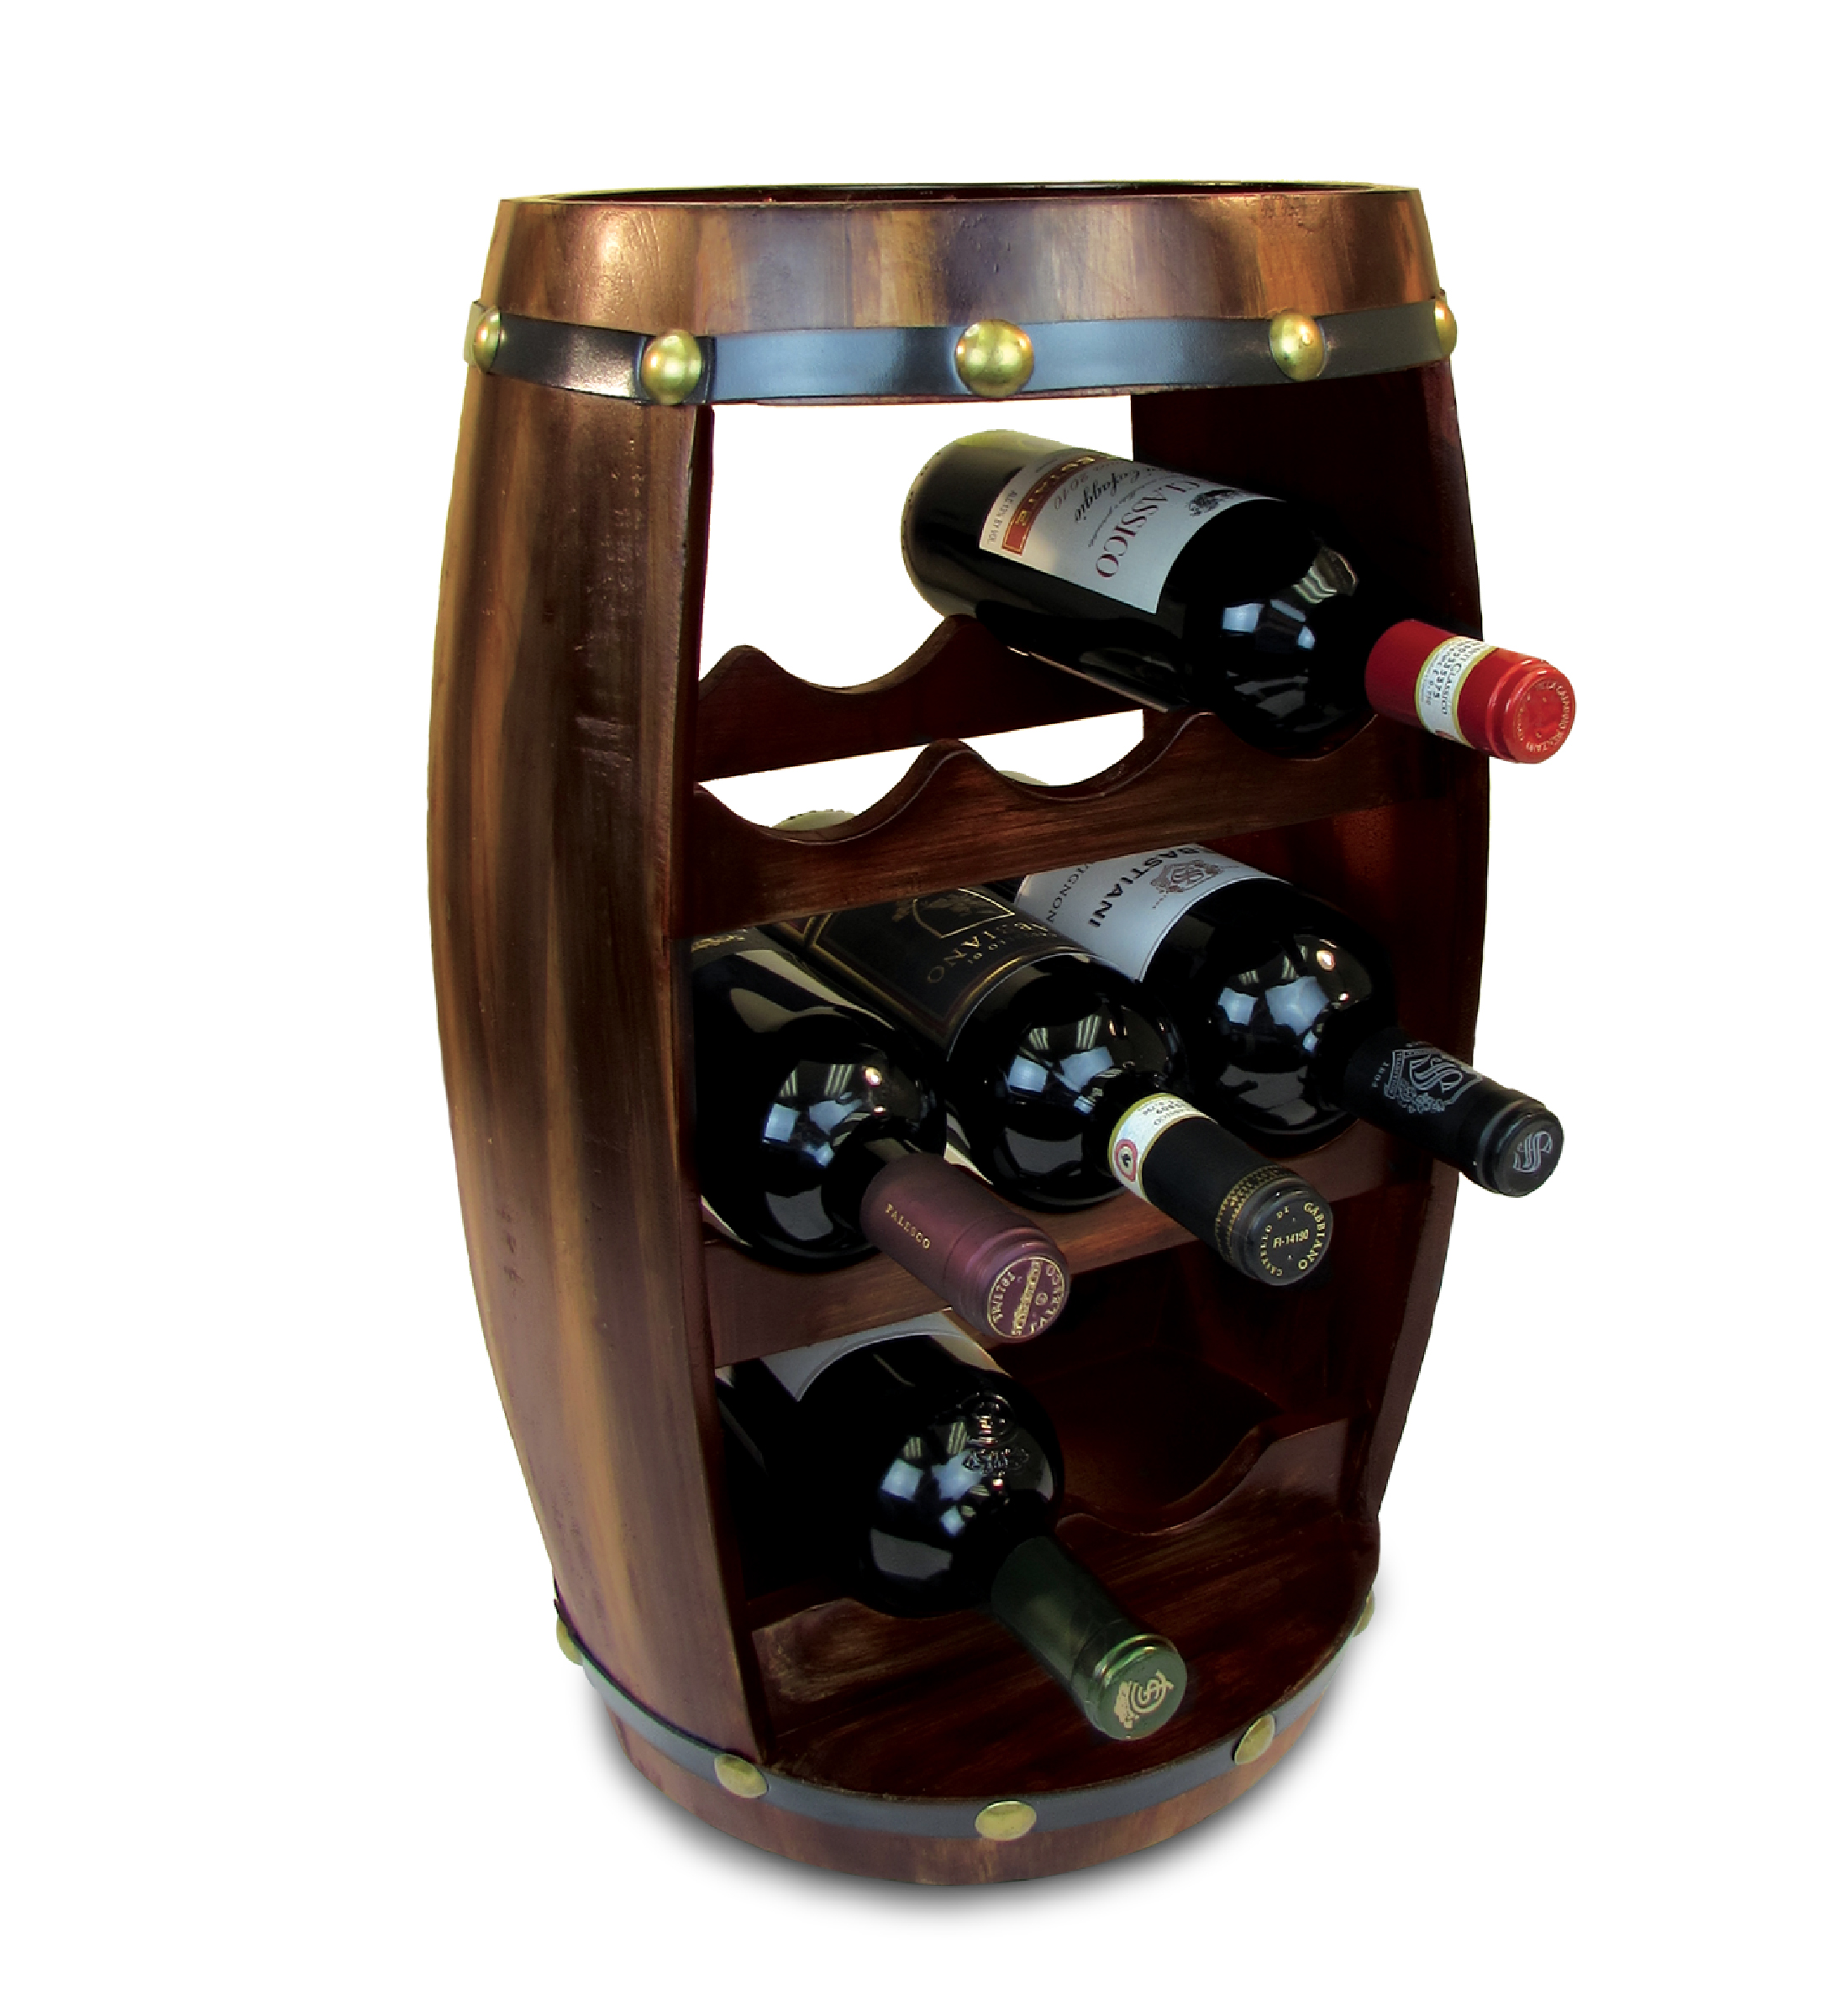 Cota Global Alexander Fir Wood Freestanding Wine Barrel Rack - image 1 of 8